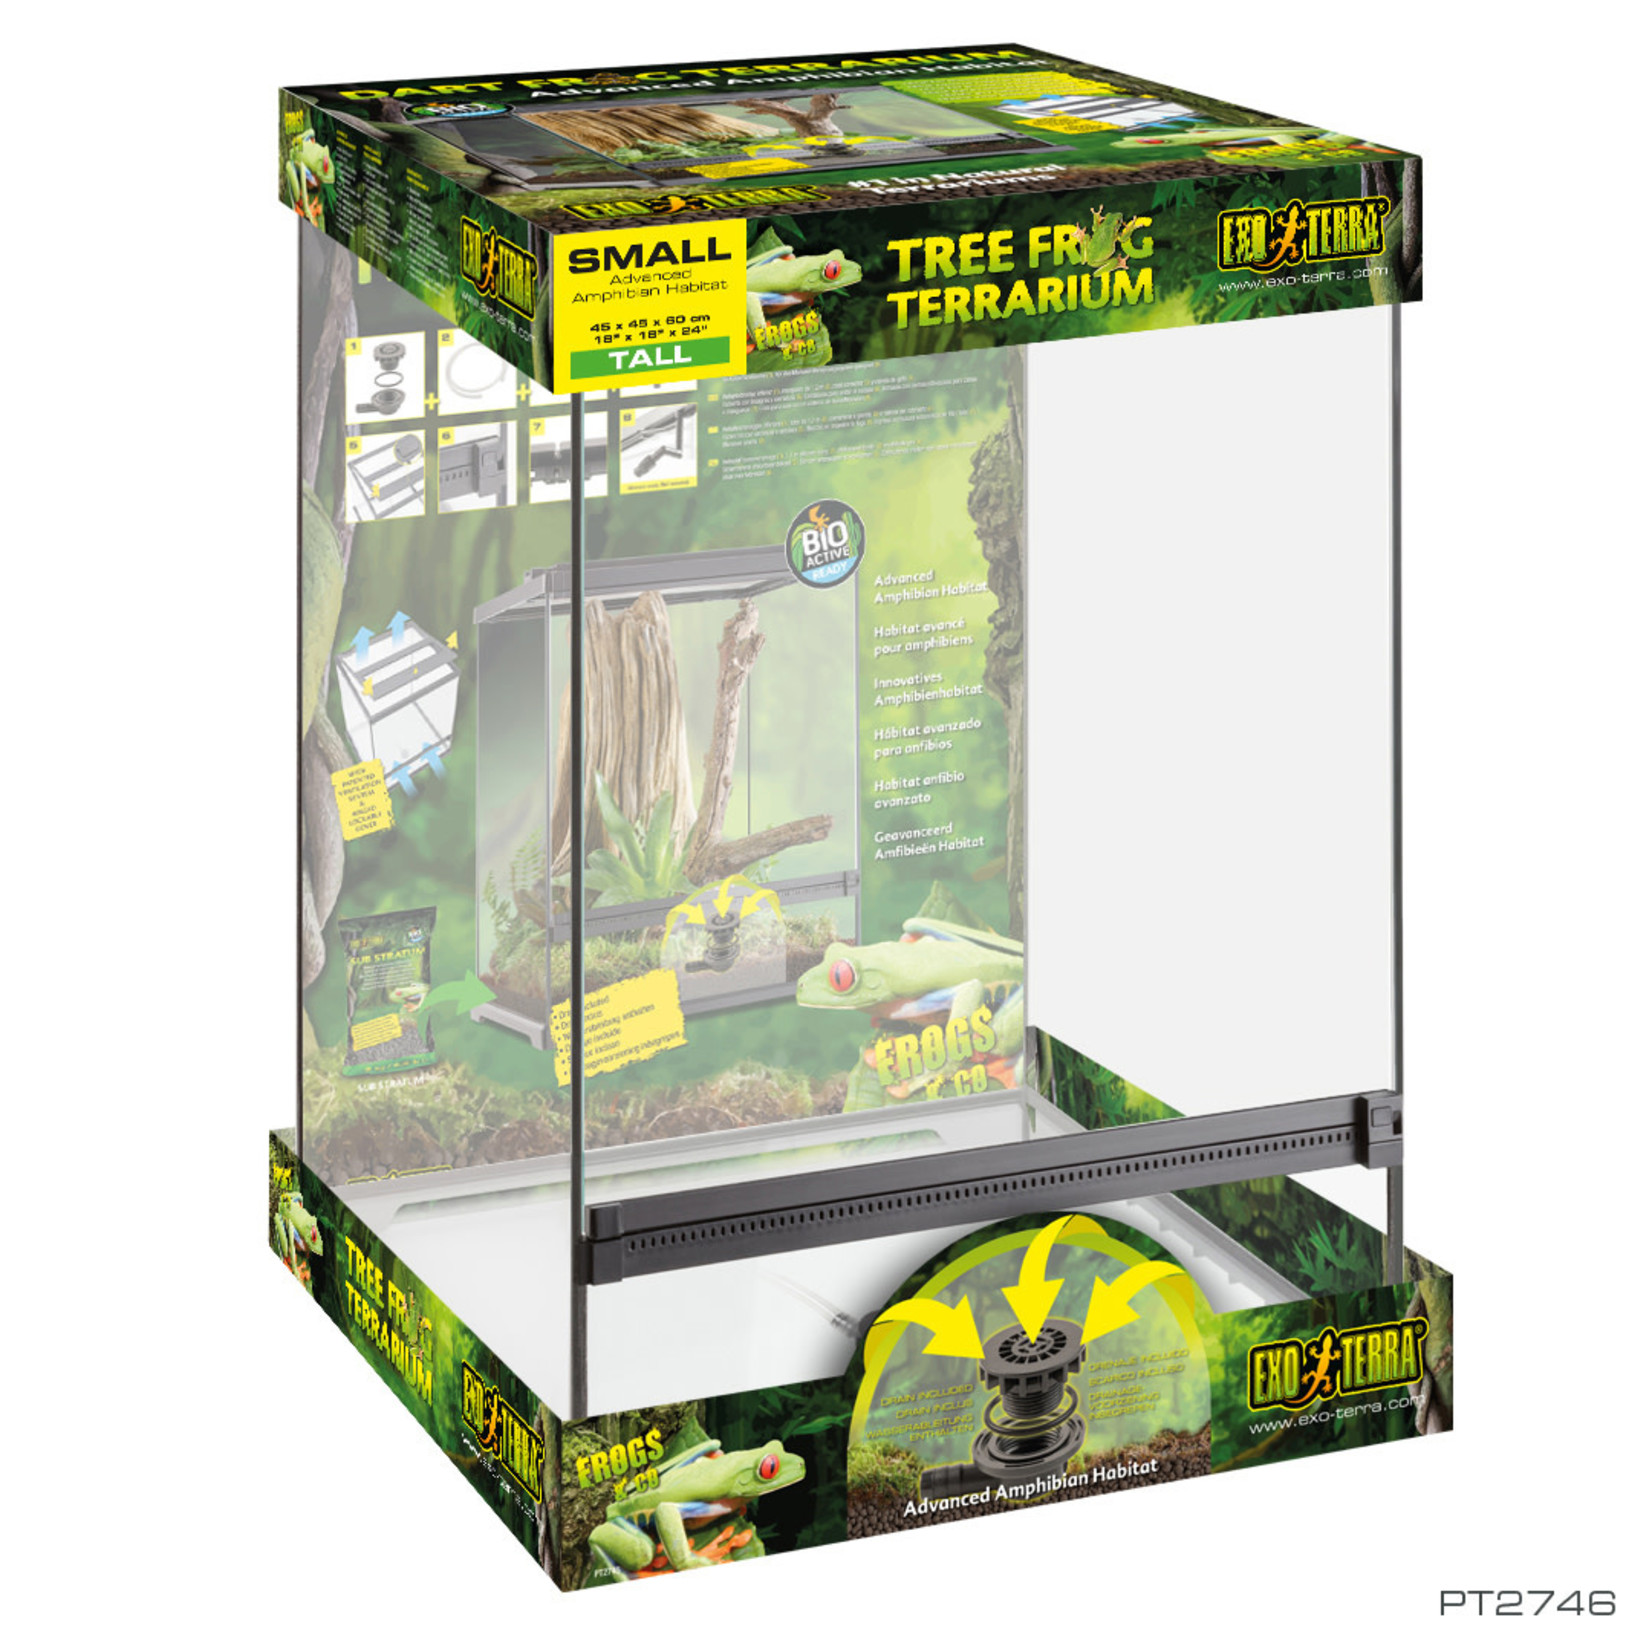 EXO TERRA Exo Terra Tree Frog Terrarium - Advanced Amphibian Habitat - Small/Tall - 18 x 18 x 24 in